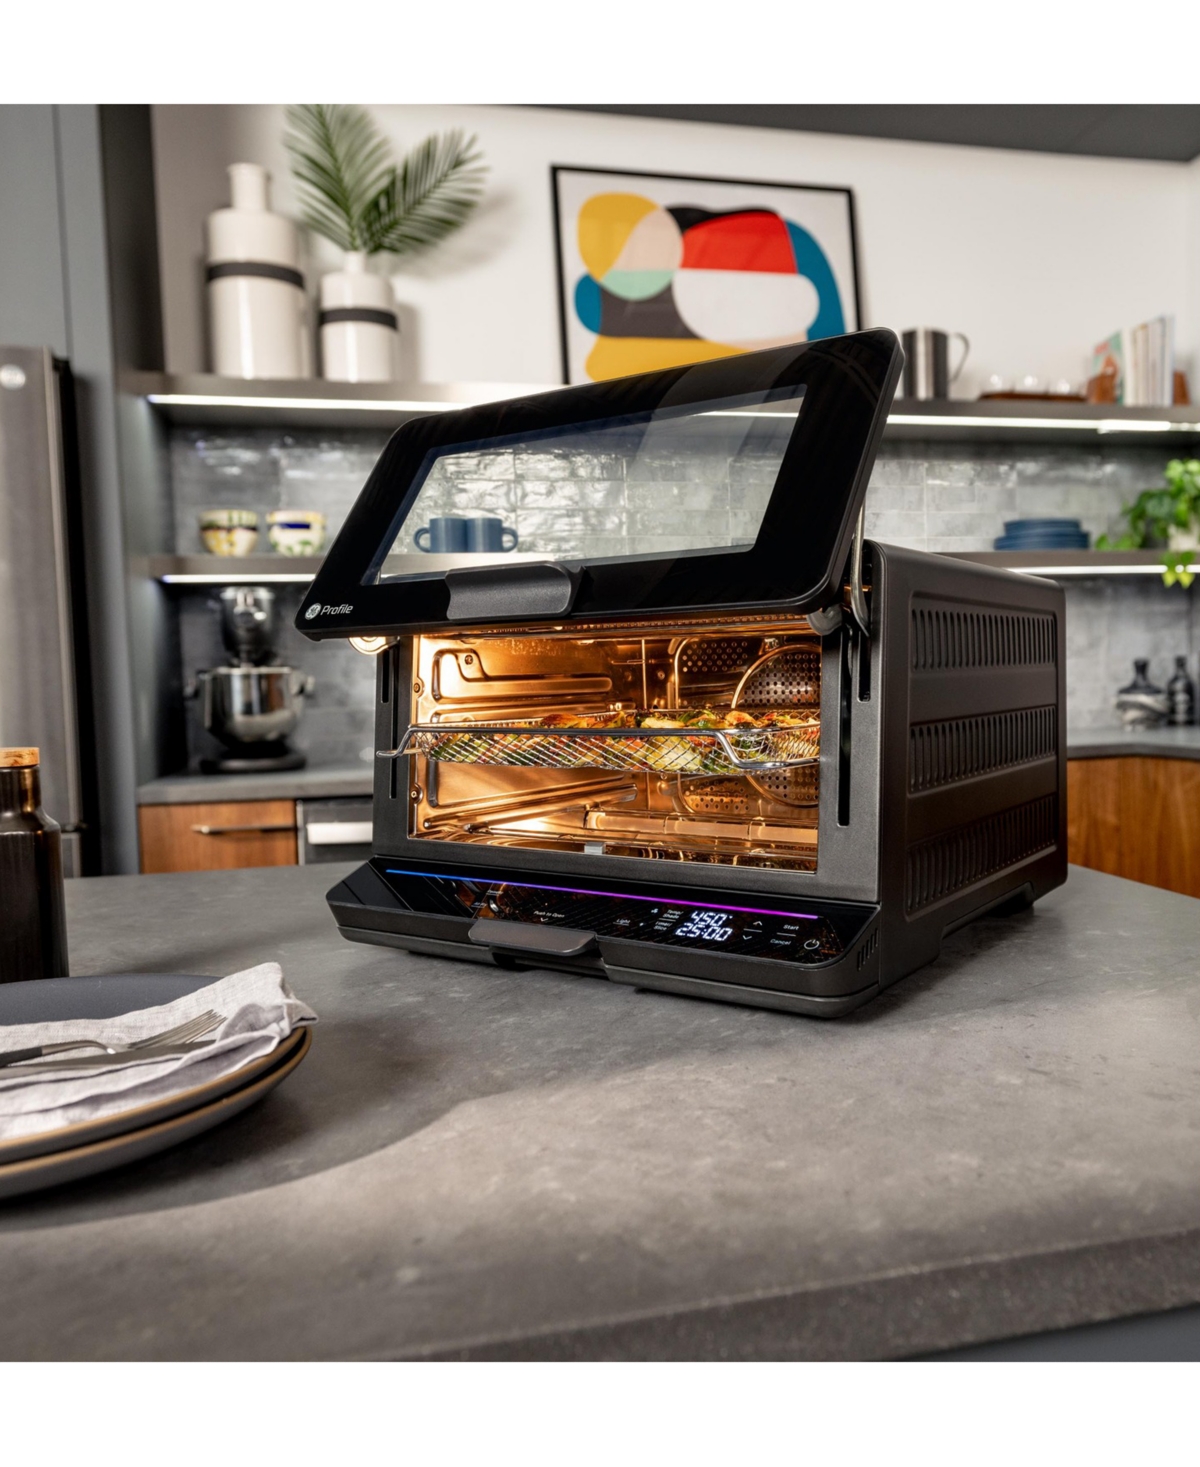 Shop Ge Appliances Profile Smart Countertop Oven P9oiaas6tbb In Black